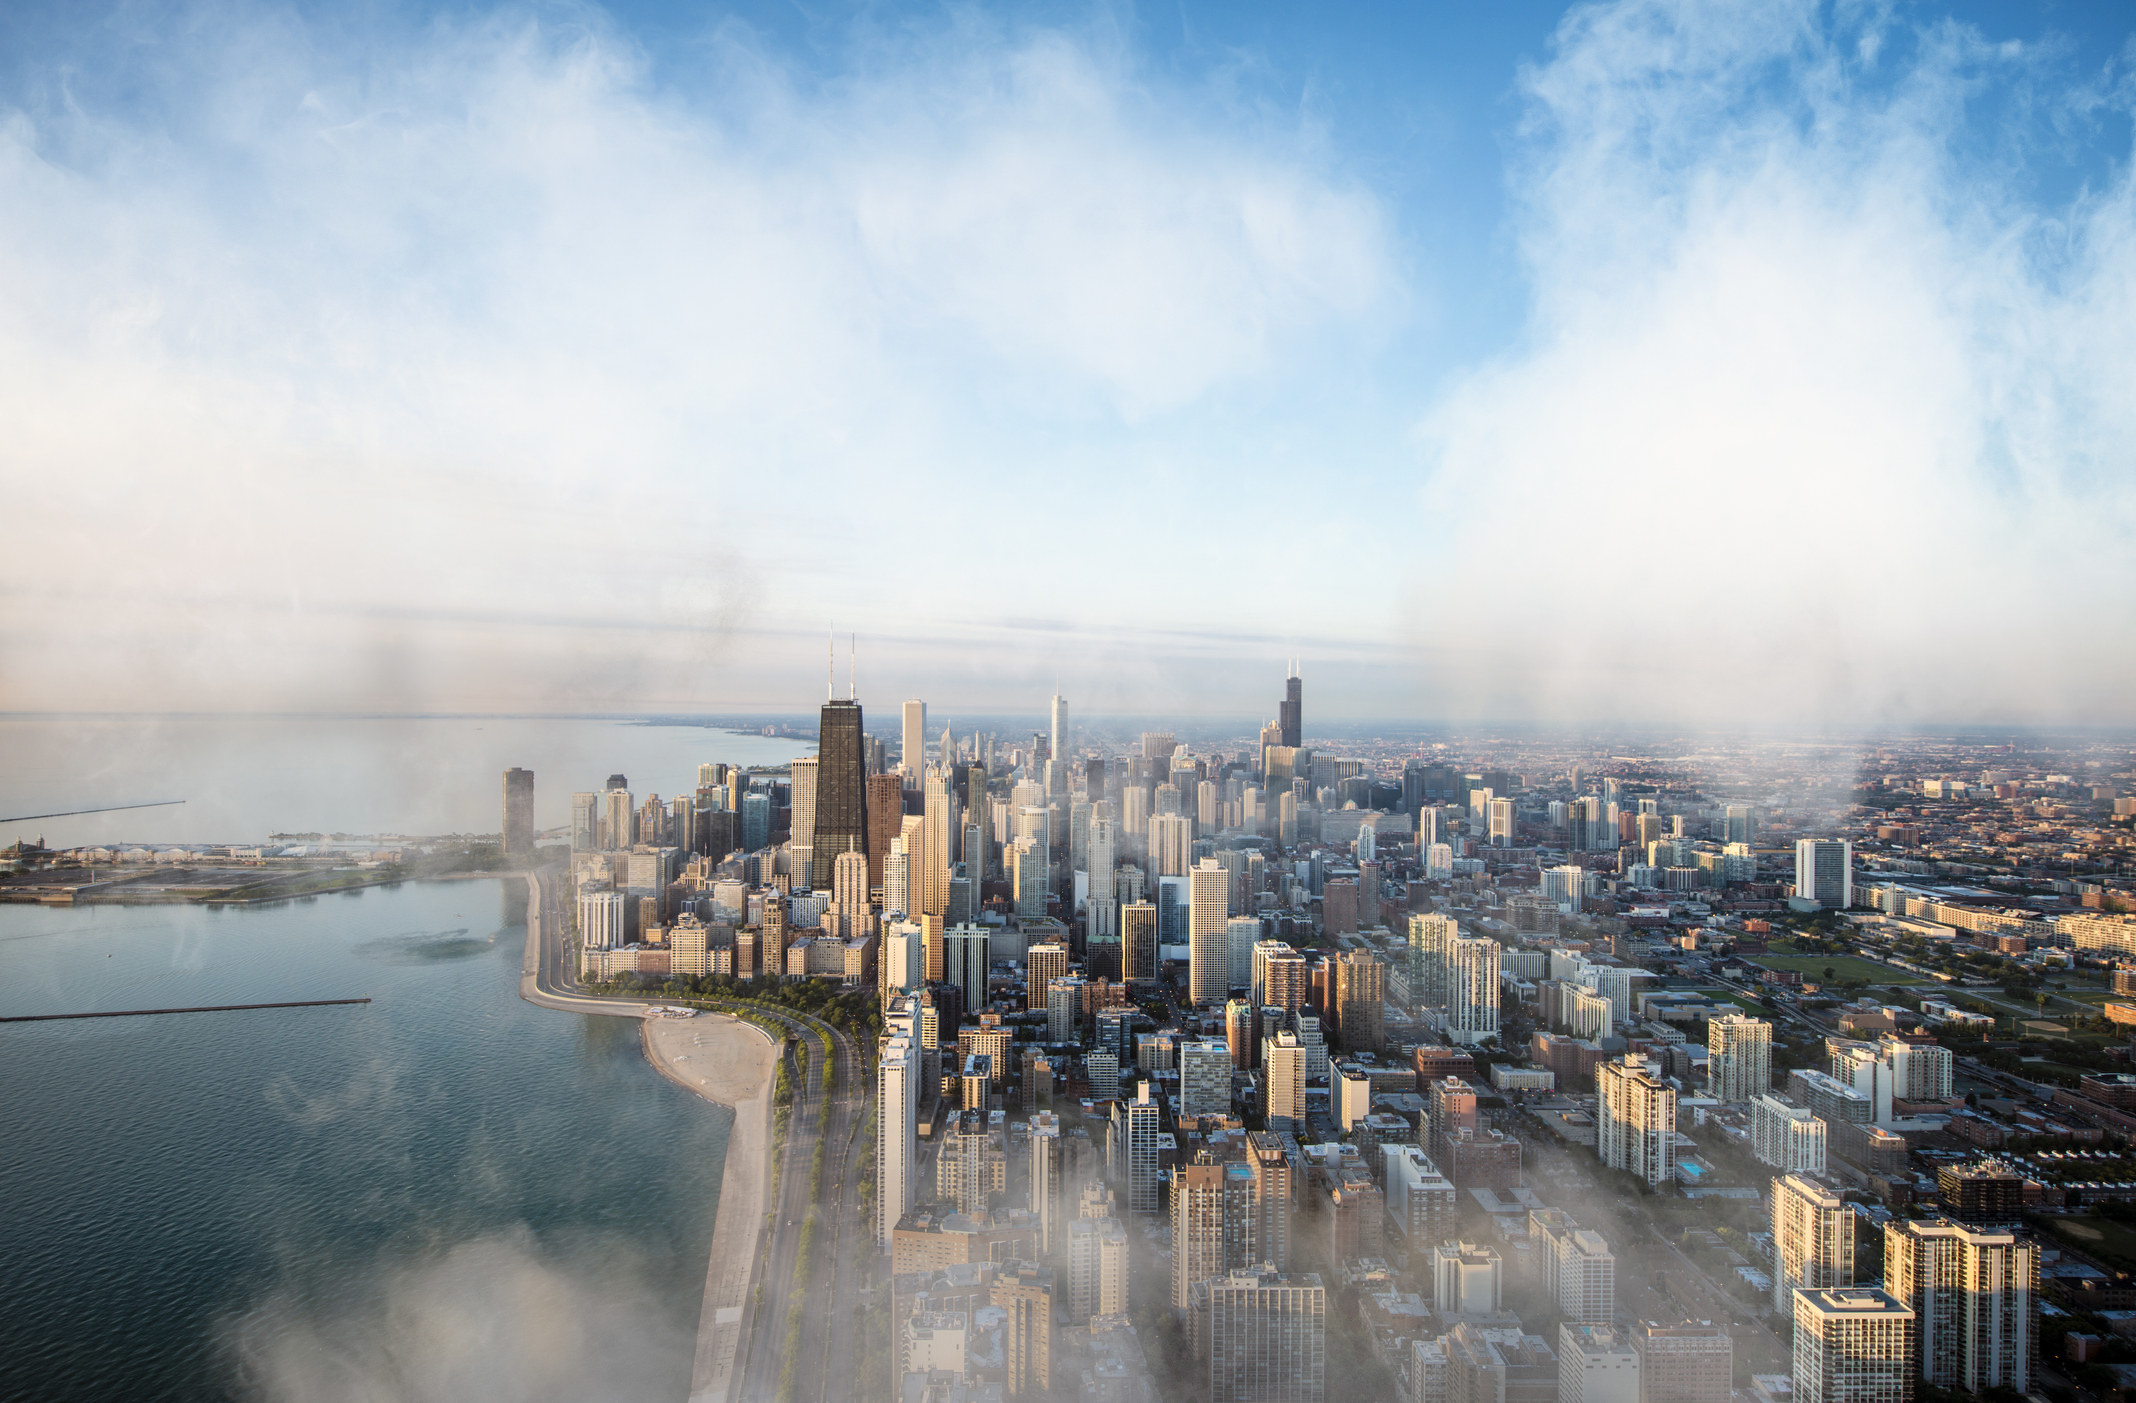 The misty skyline of Chicago